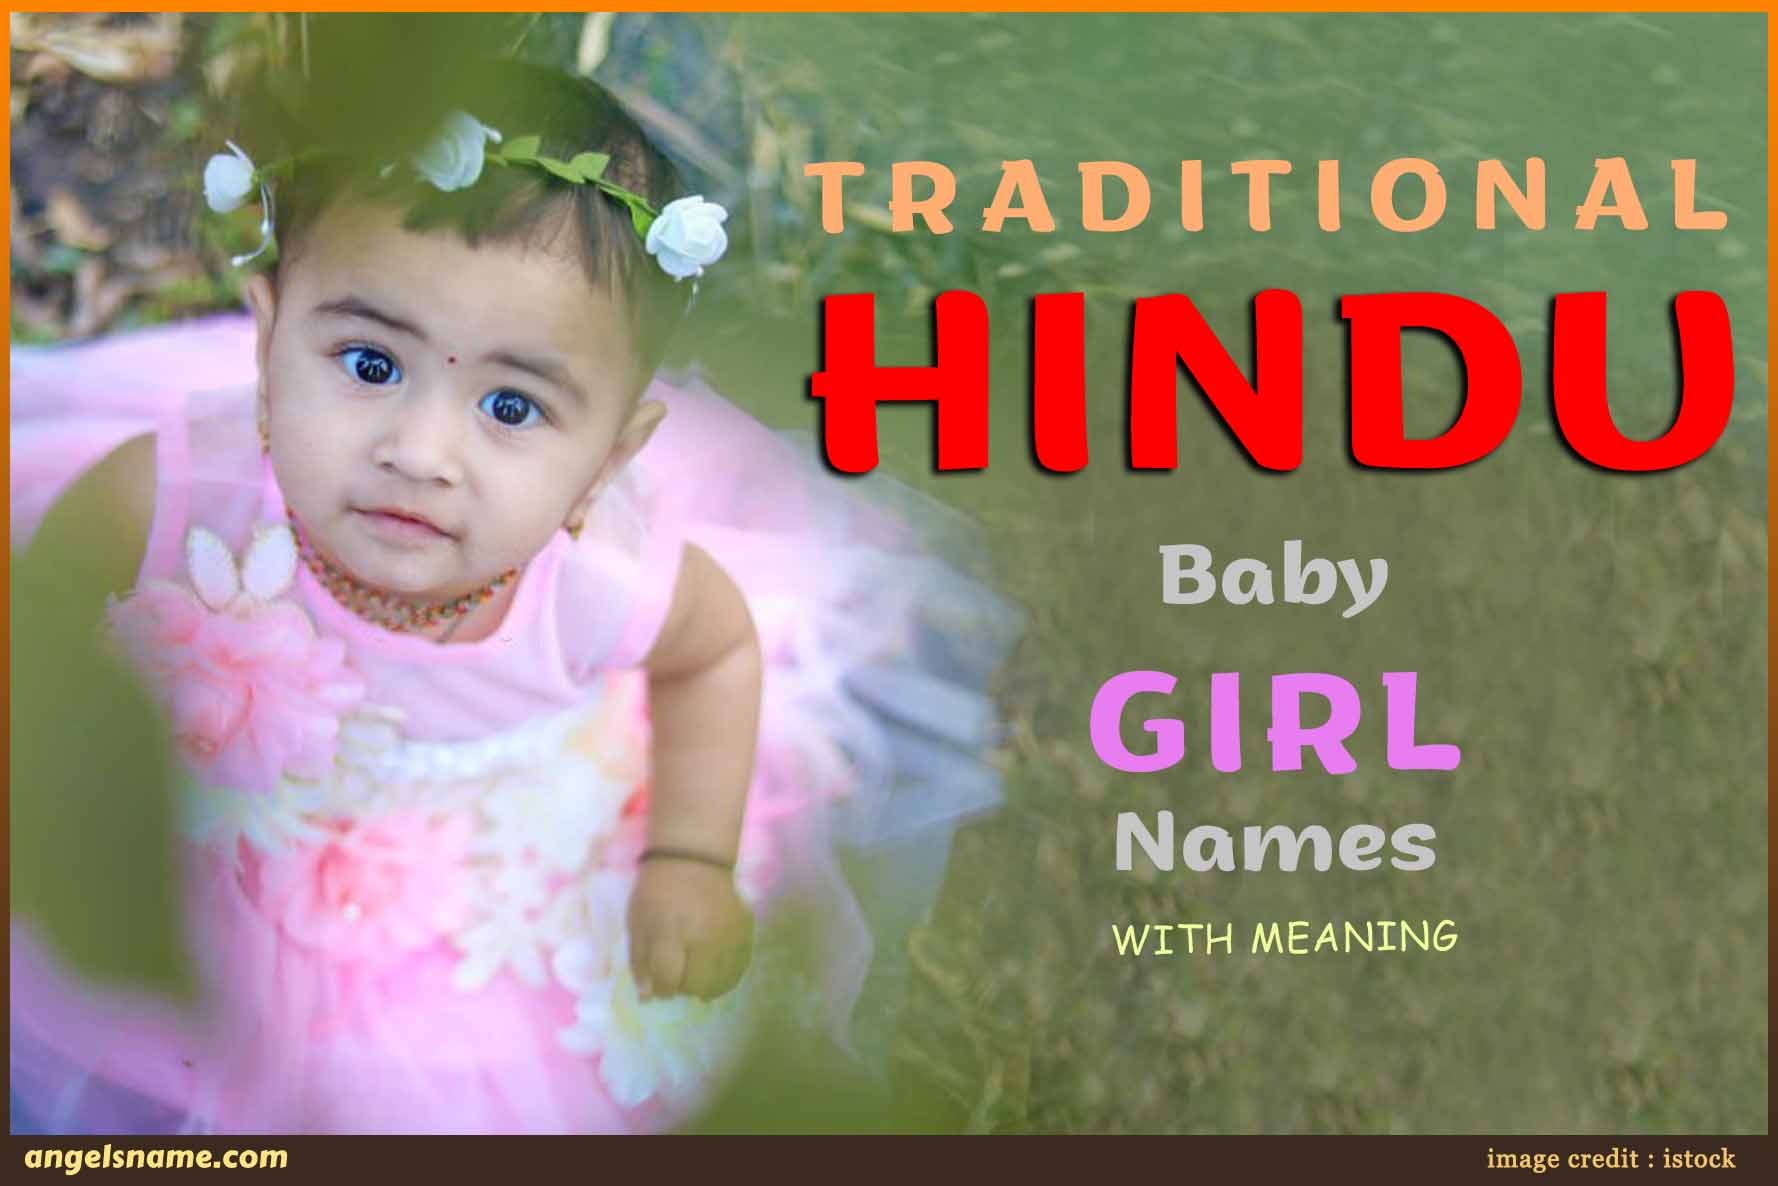 Traditional Indian Hindu Baby Girl Names